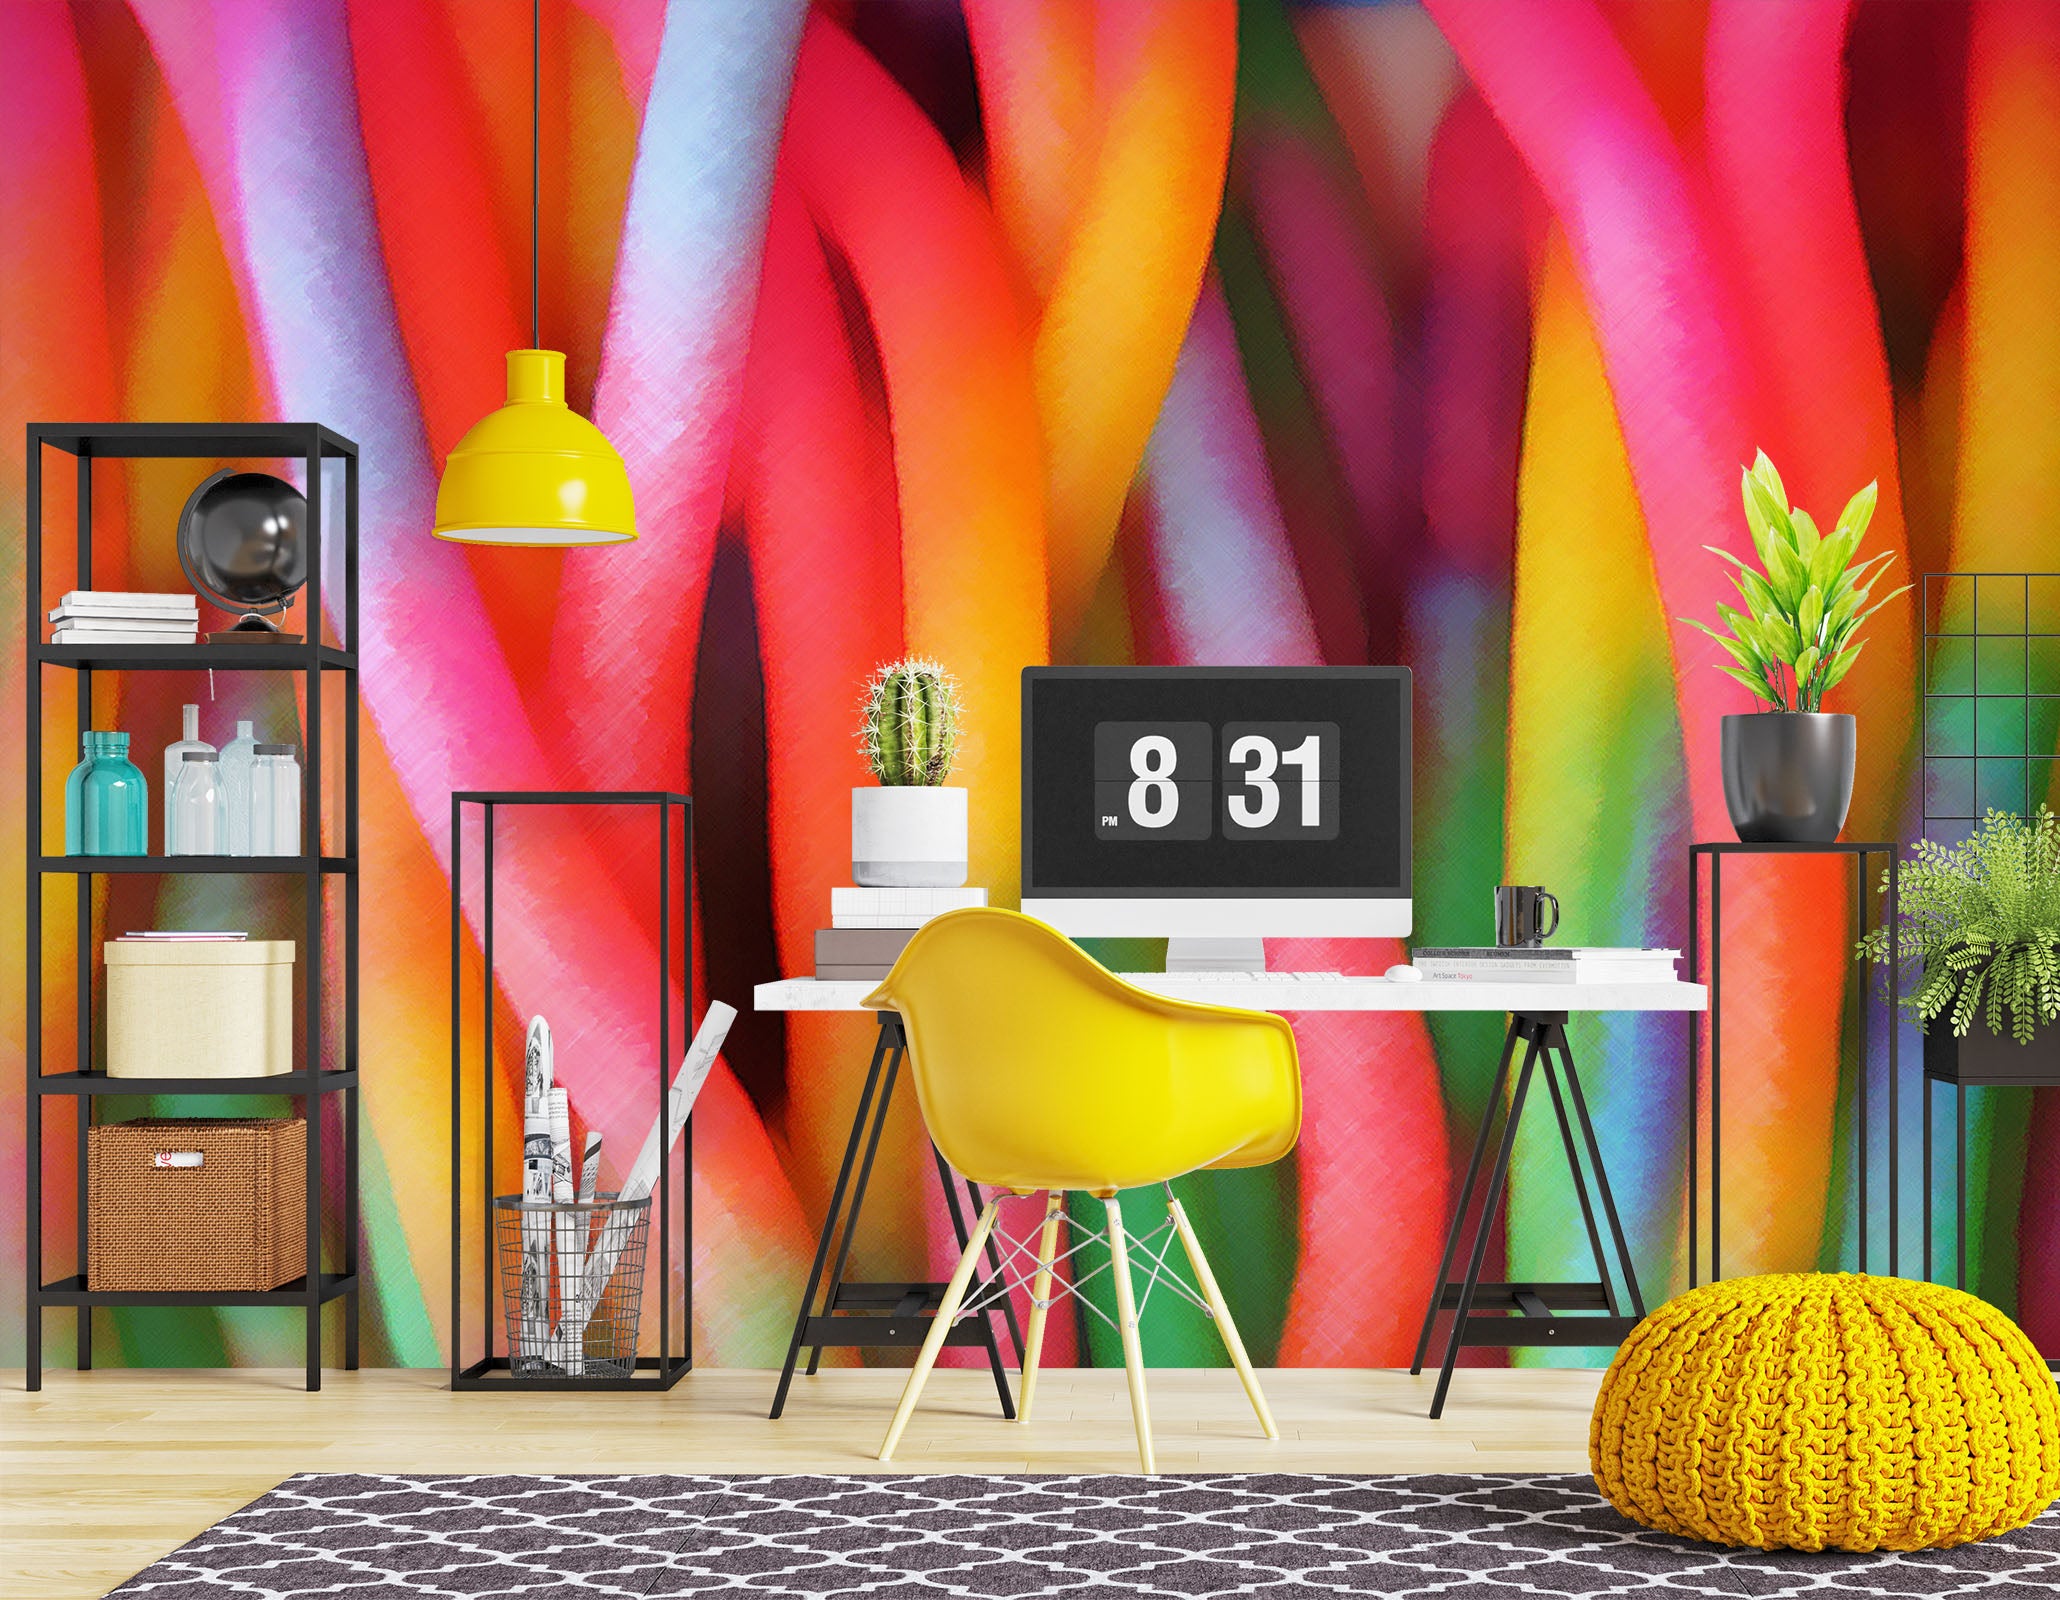 3D Color Bars 71076 Shandra Smith Wall Mural Wall Murals